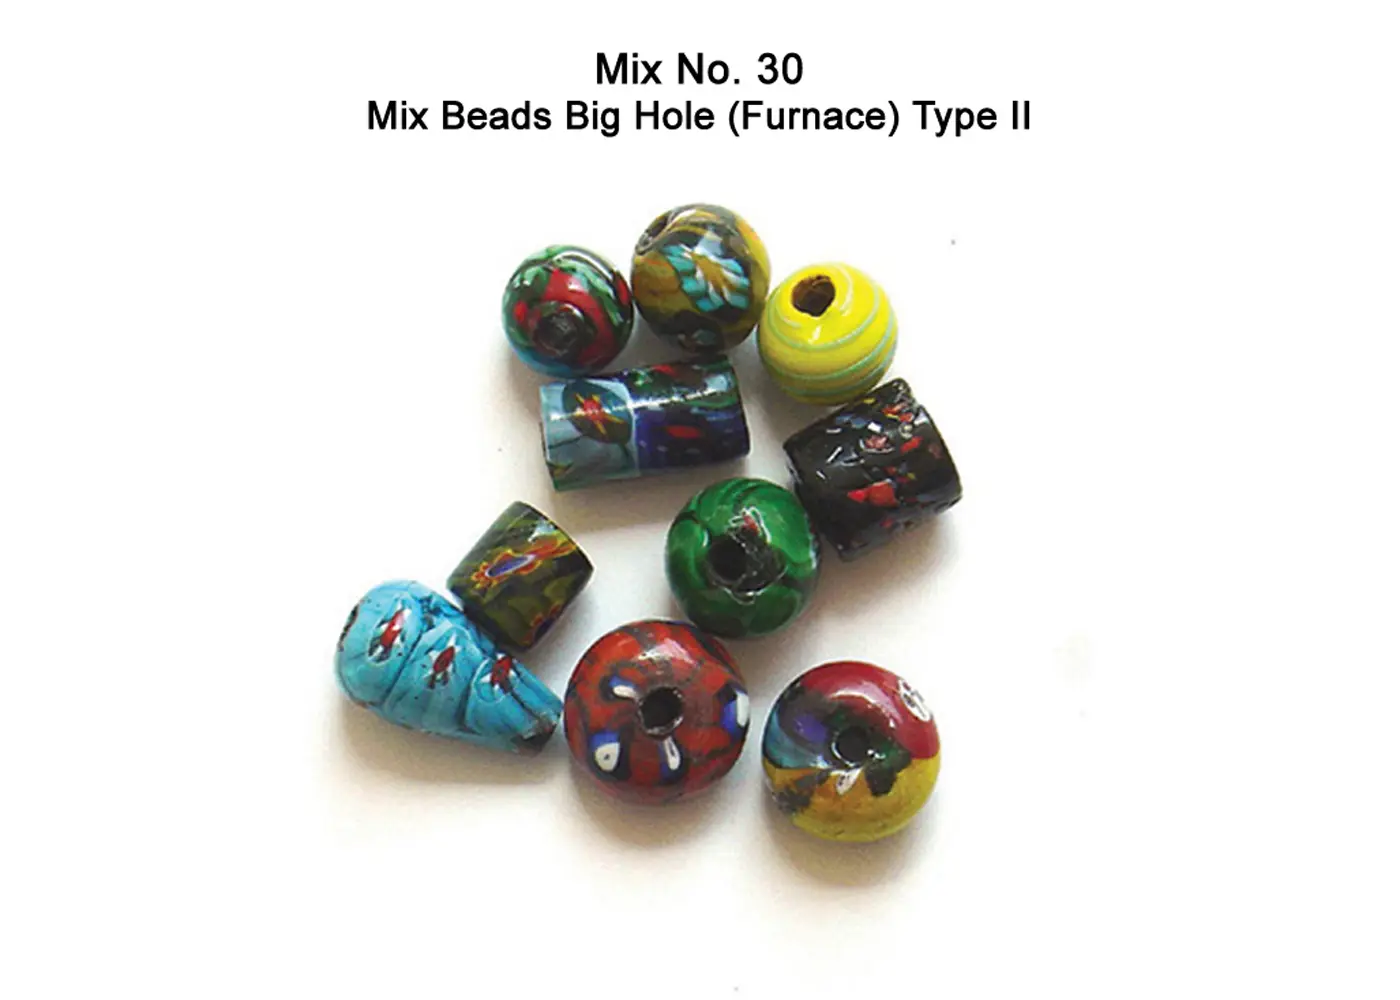 Mix Beads Big Hole (Furnace) Type II